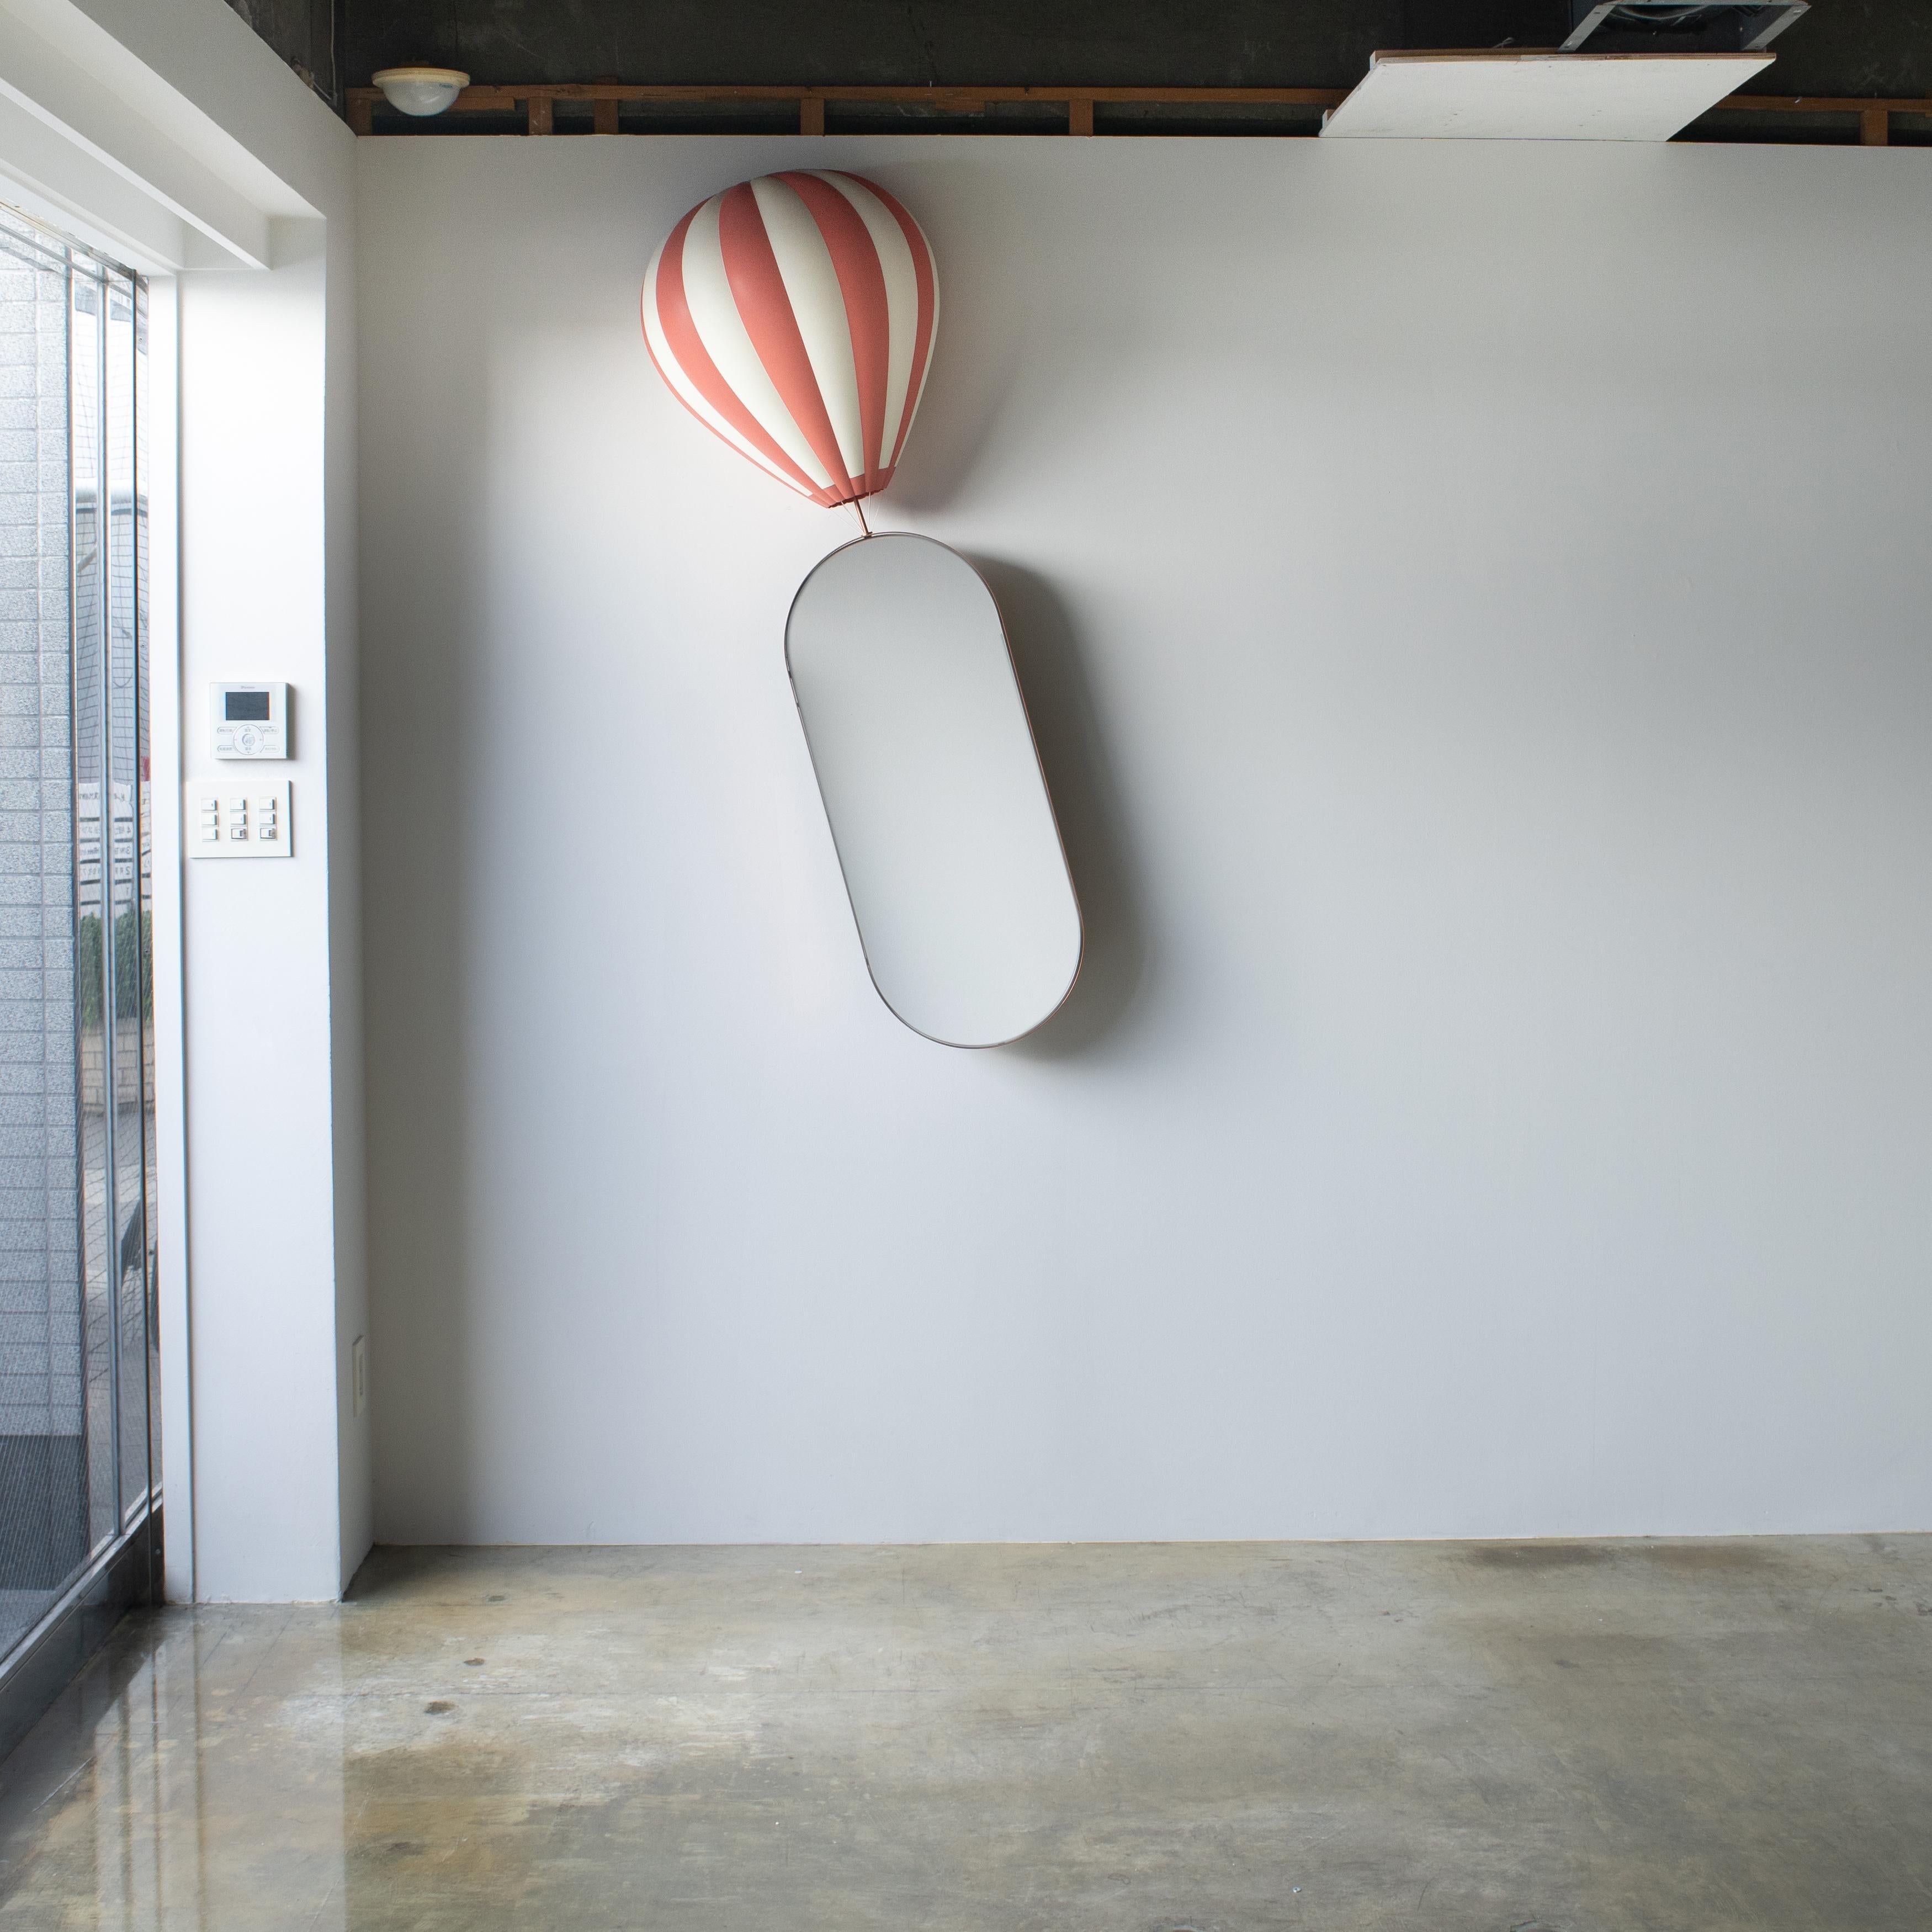 Wandspiegel mit Ballon h220430 Satoshi Itasaka (Moderne) im Angebot